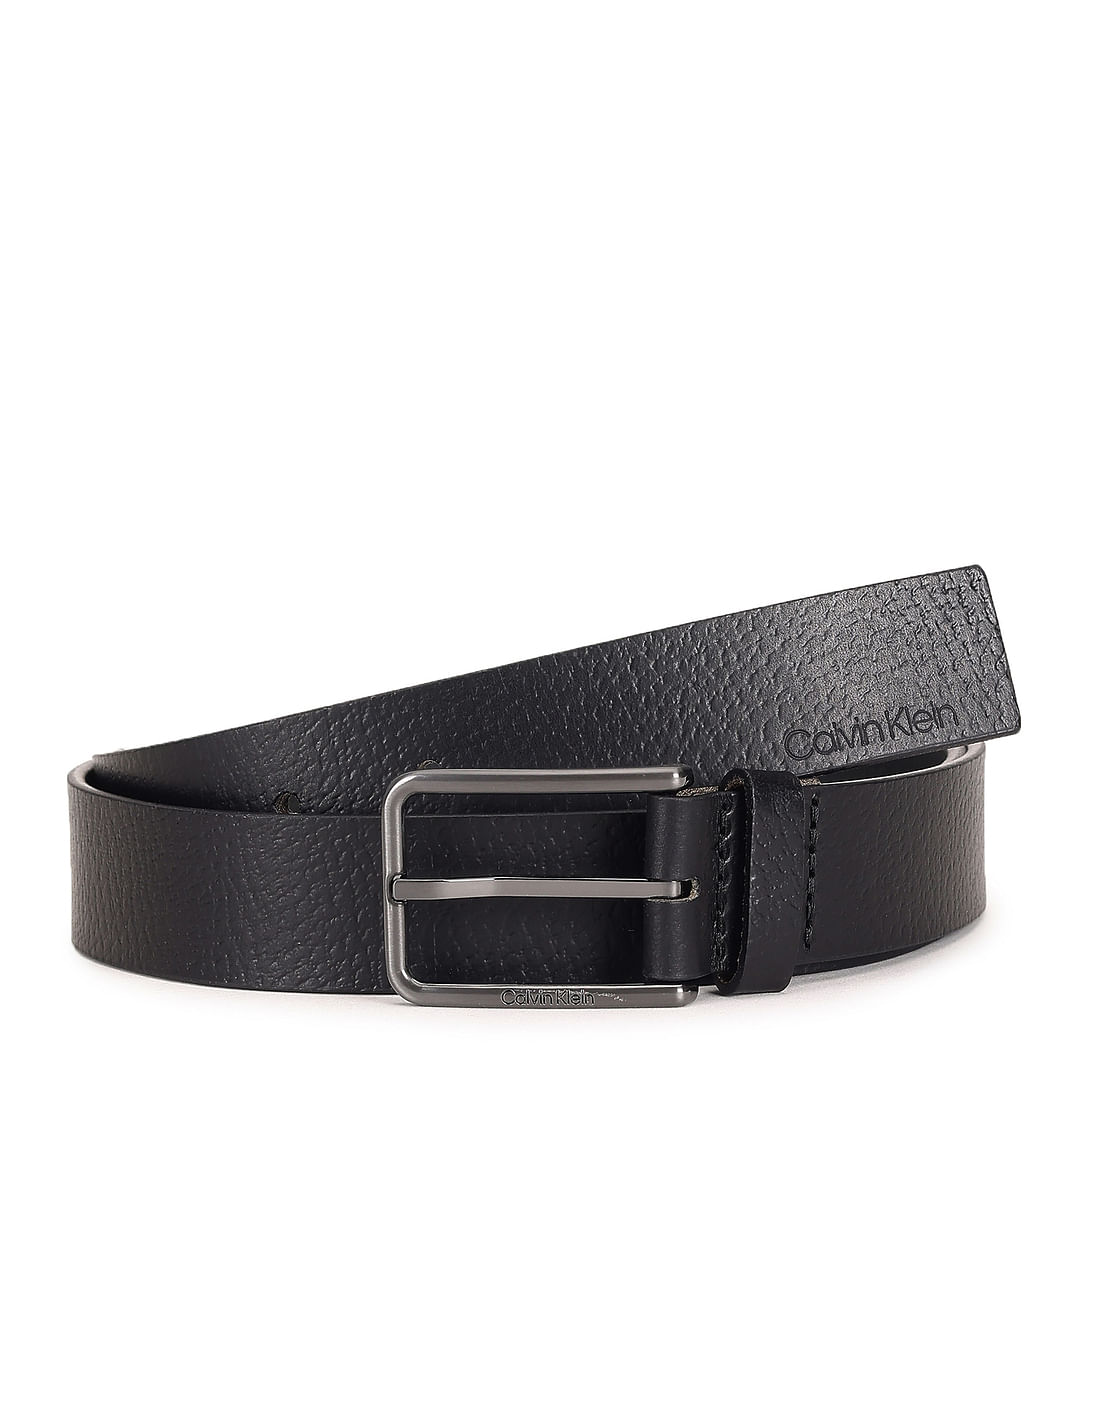 Buy Calvin Klein Solid Leather Warmth Belt - NNNOW.com